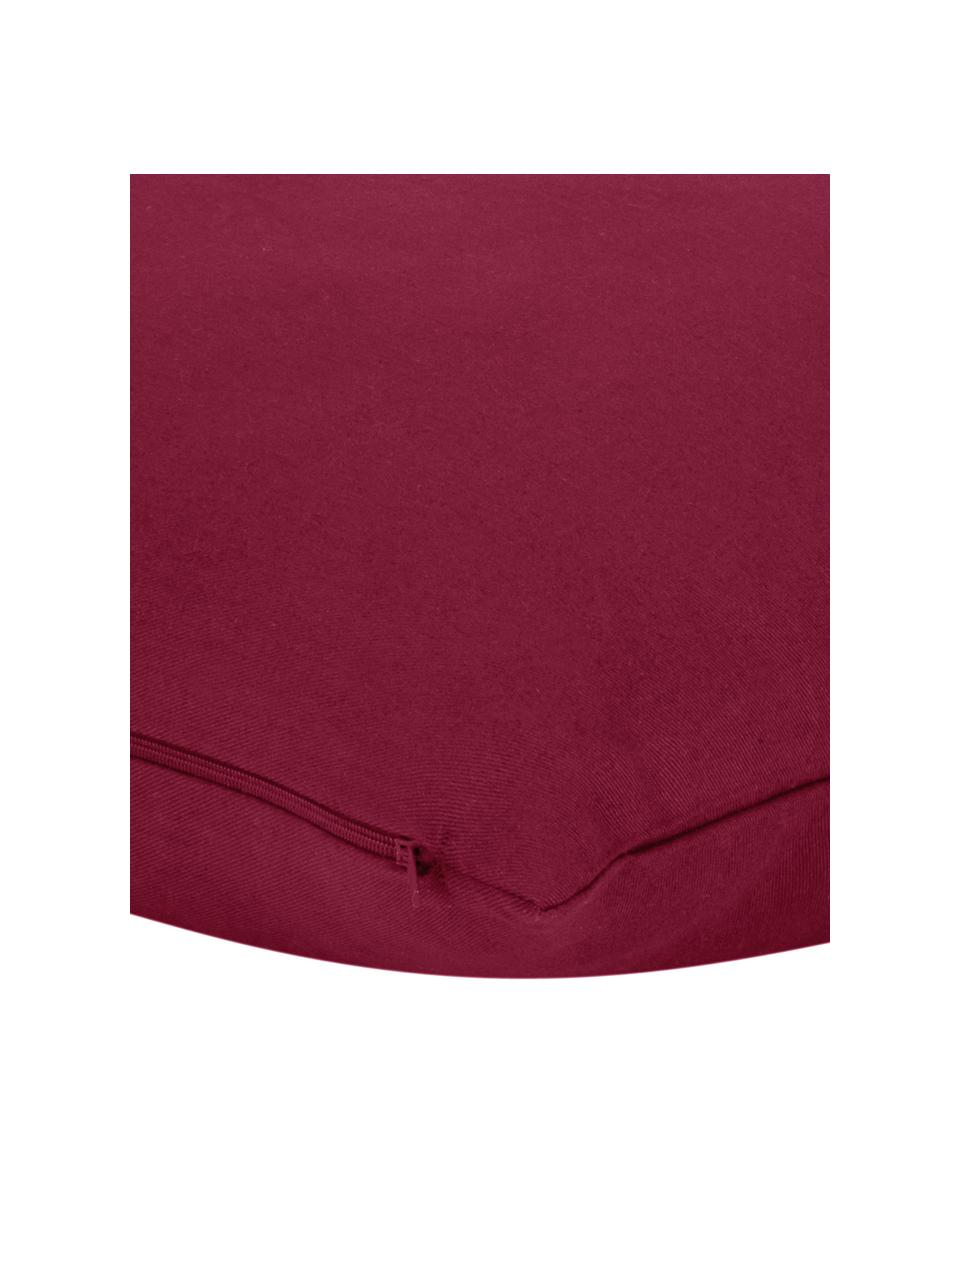 Federa arredo in cotone rosso Mads, 100% cotone, Rosso, Larg. 40 x Lung. 40 cm